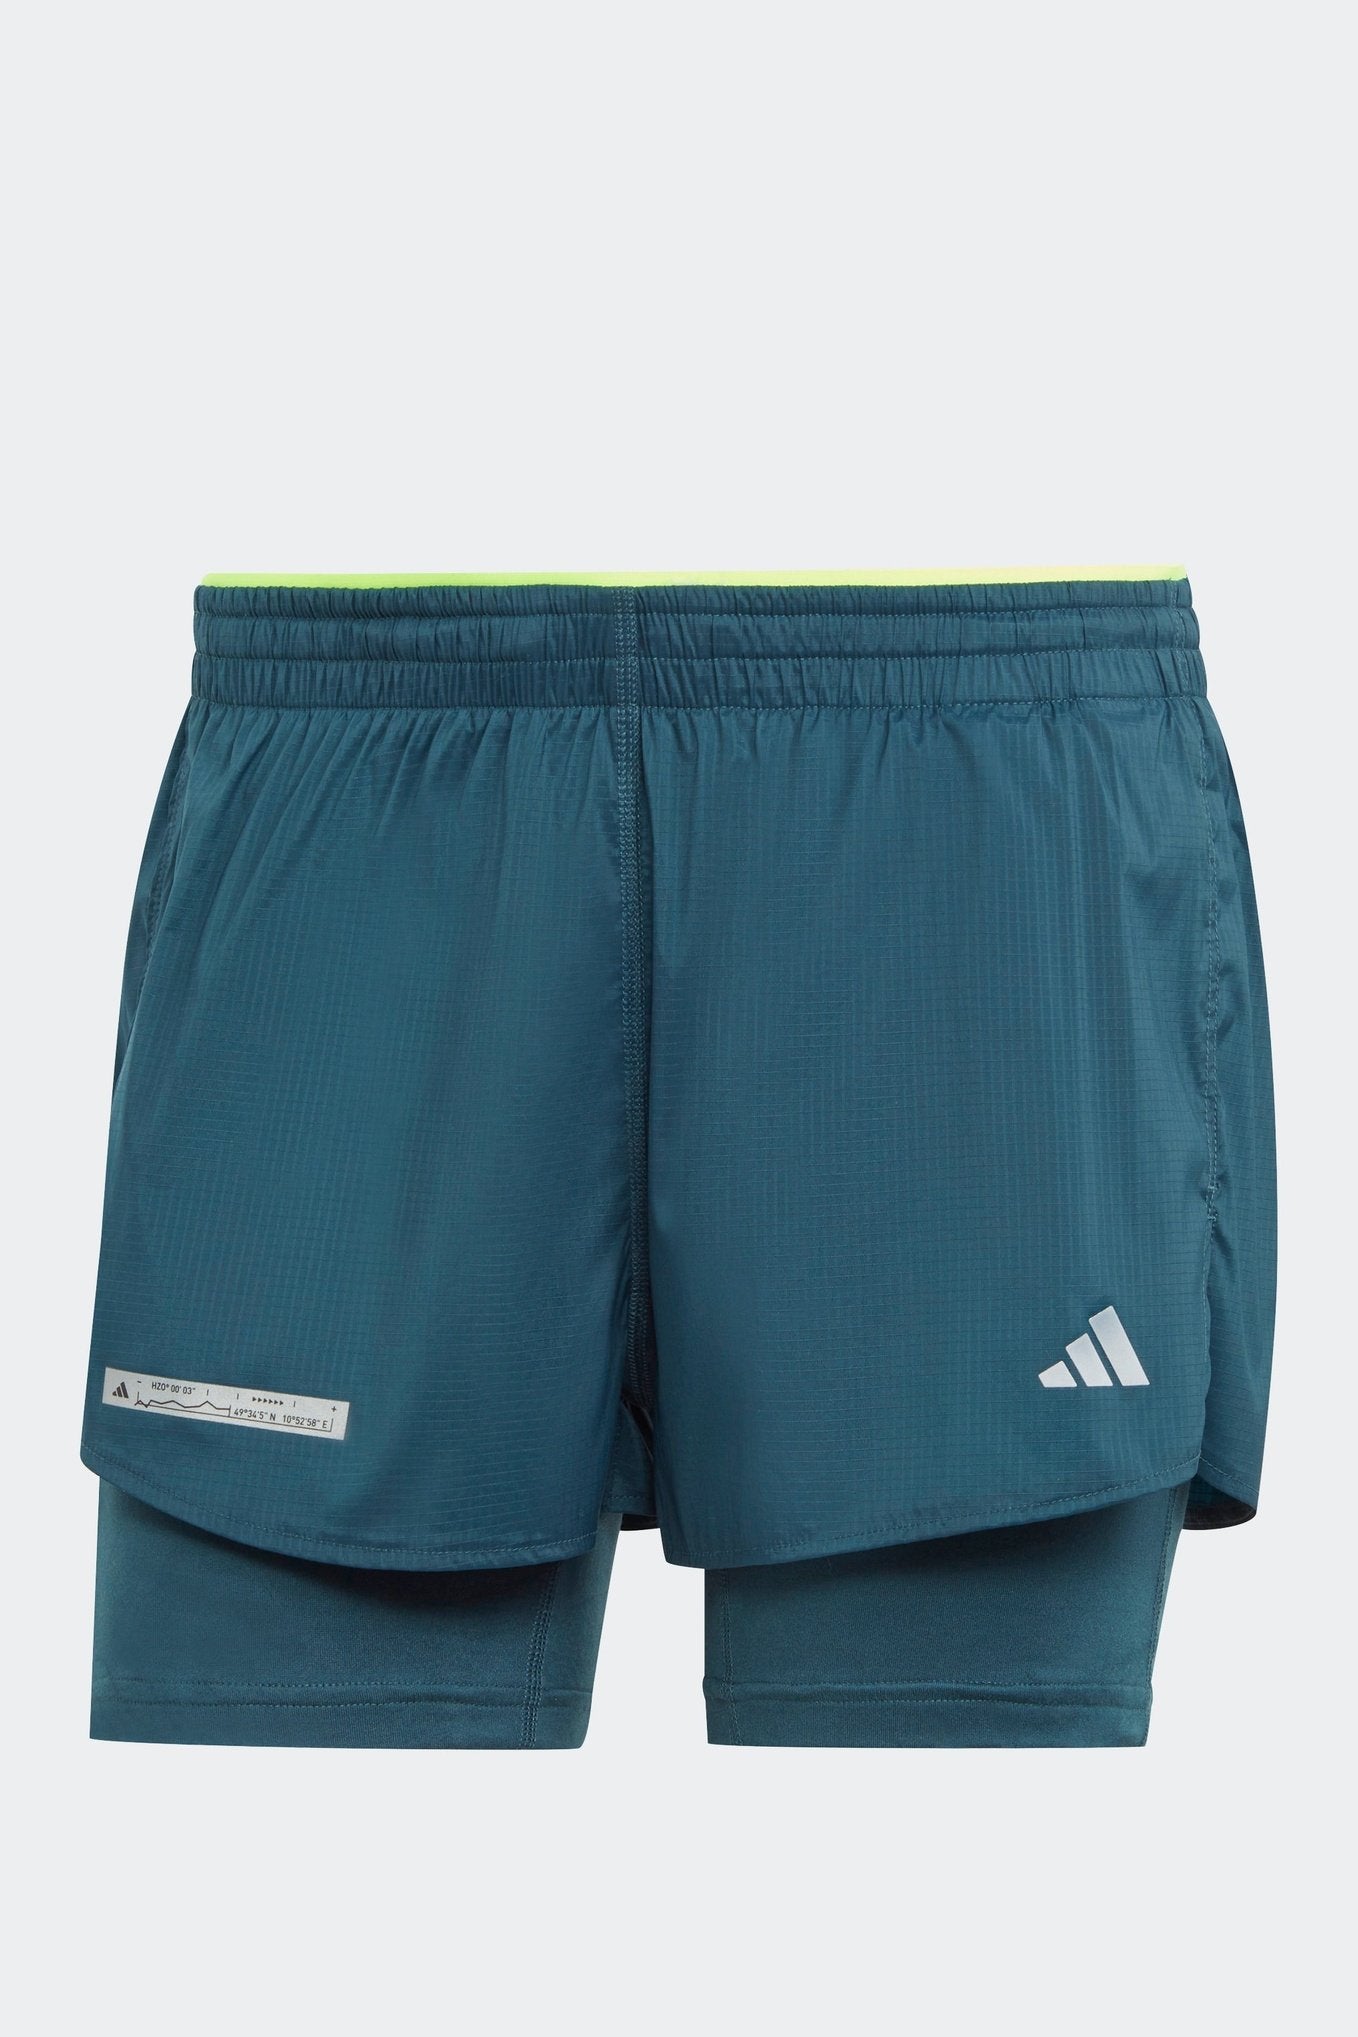 ADIDAS - מכנסיים קצרים לנשים ULTIMATE TWO IN ONE בצבע כחול - MASHBIR//365